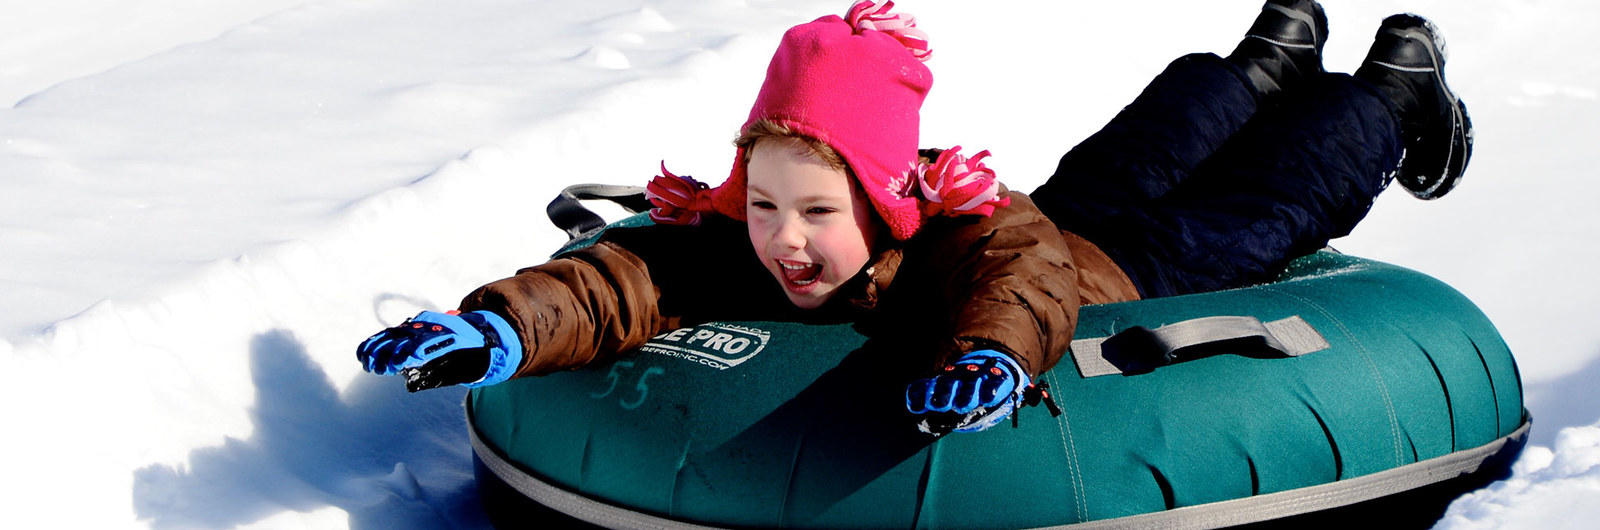 Child enjoying ride on snow tube